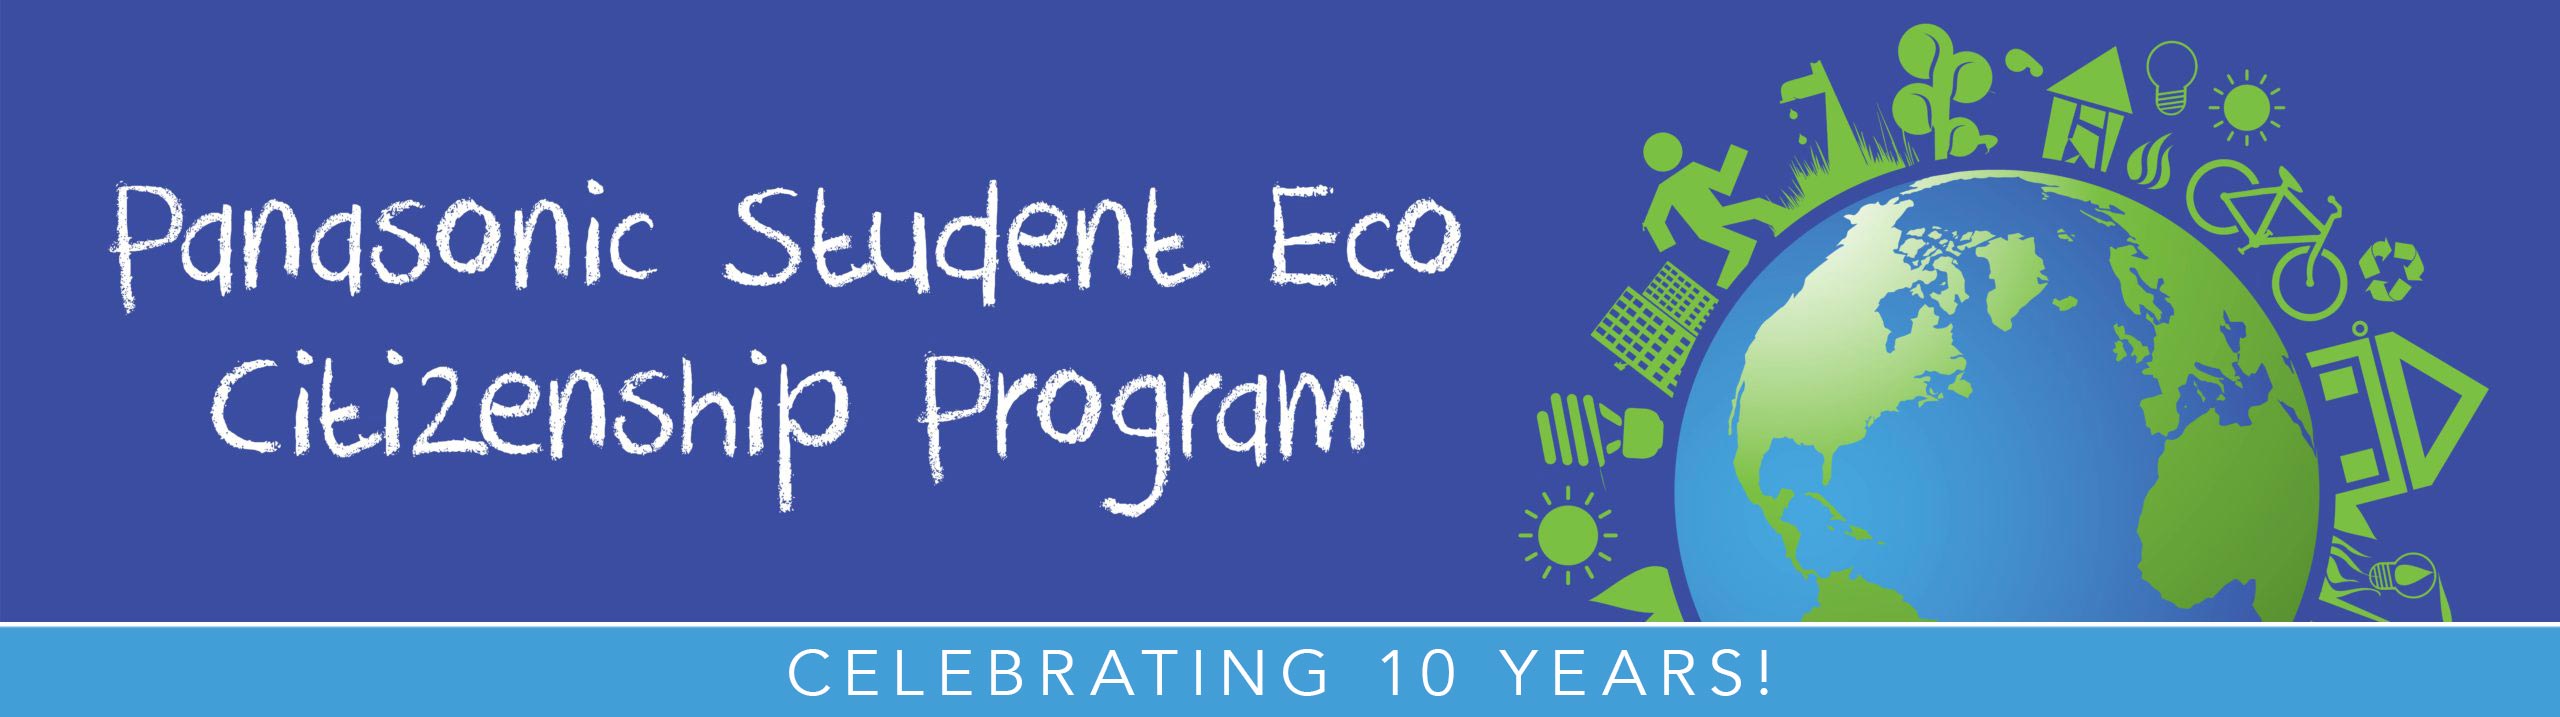 Panasonic Student Eco Citizenship Program